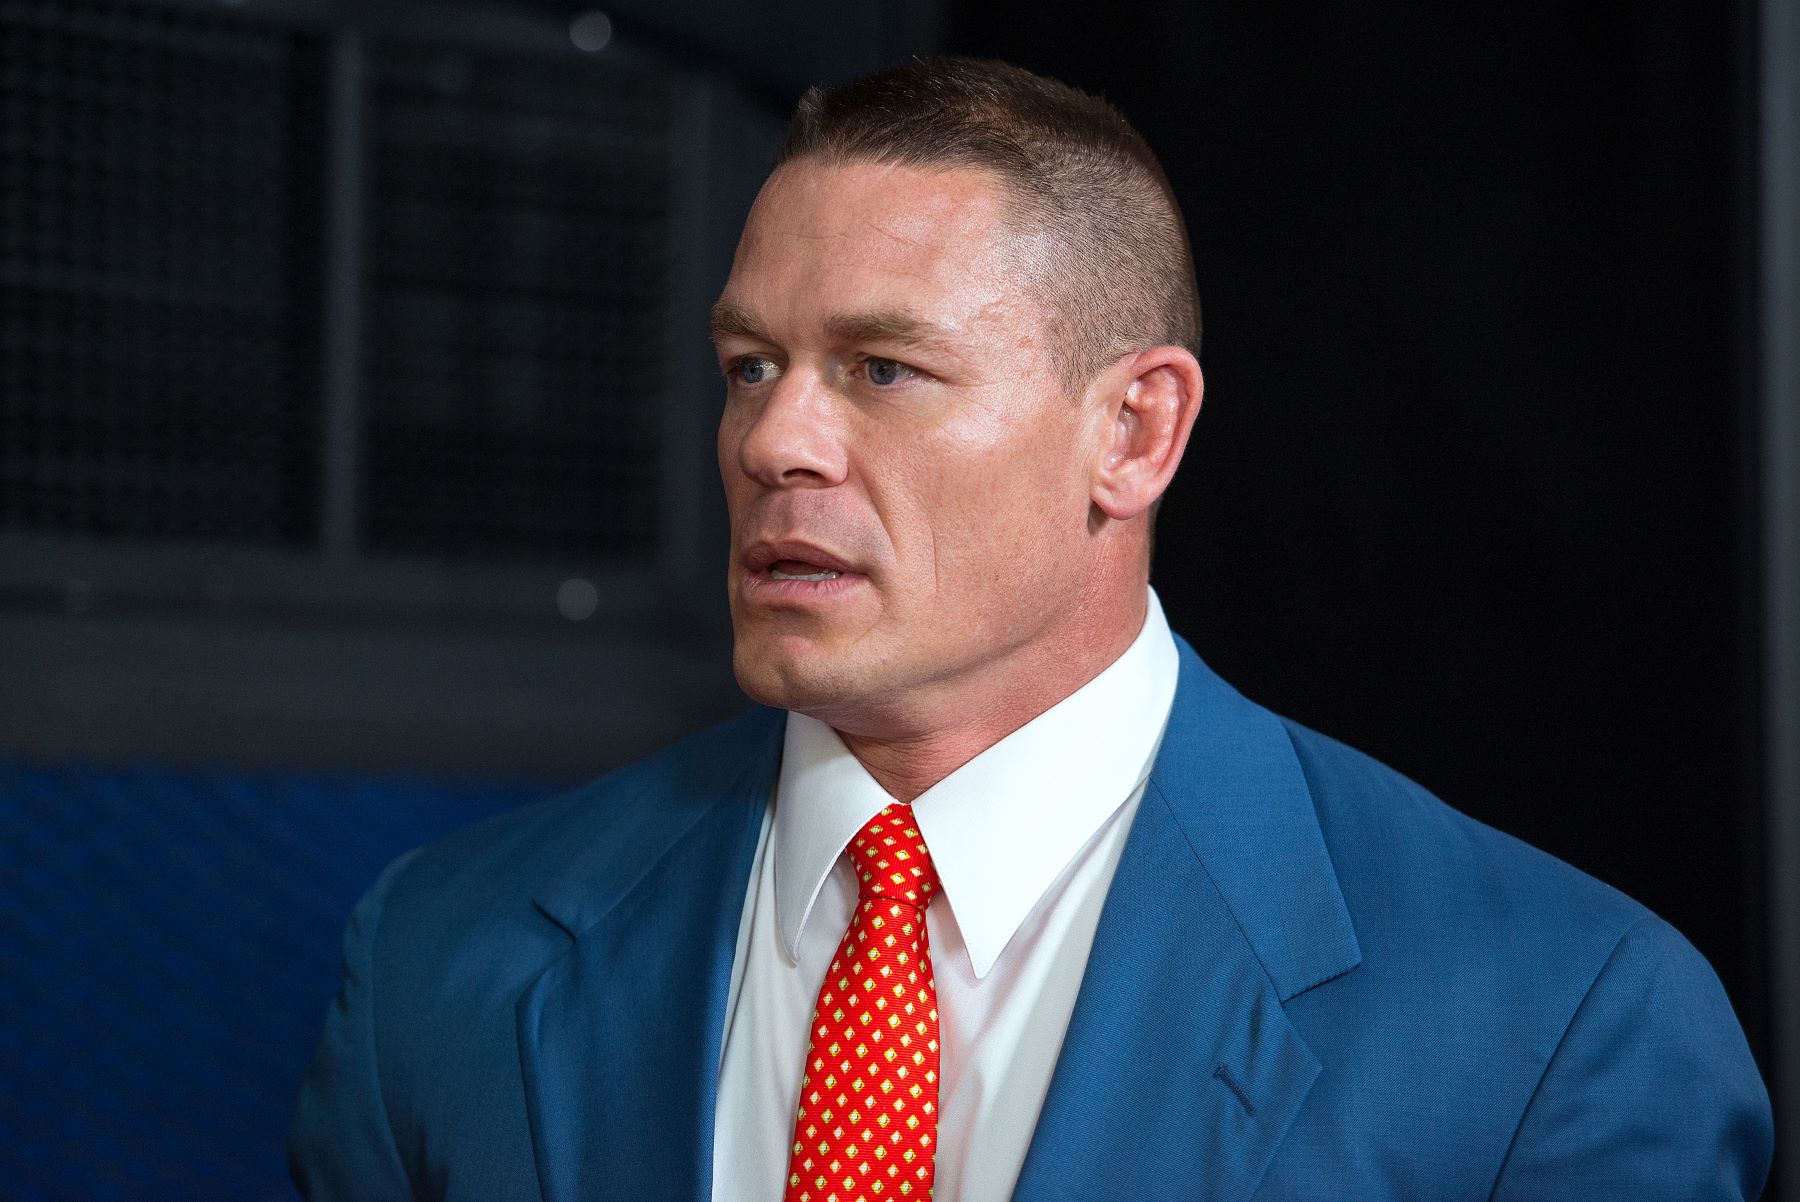 John Cena Made $2.5 Million Salary for 3 ‘Trainwreck’ Scenes